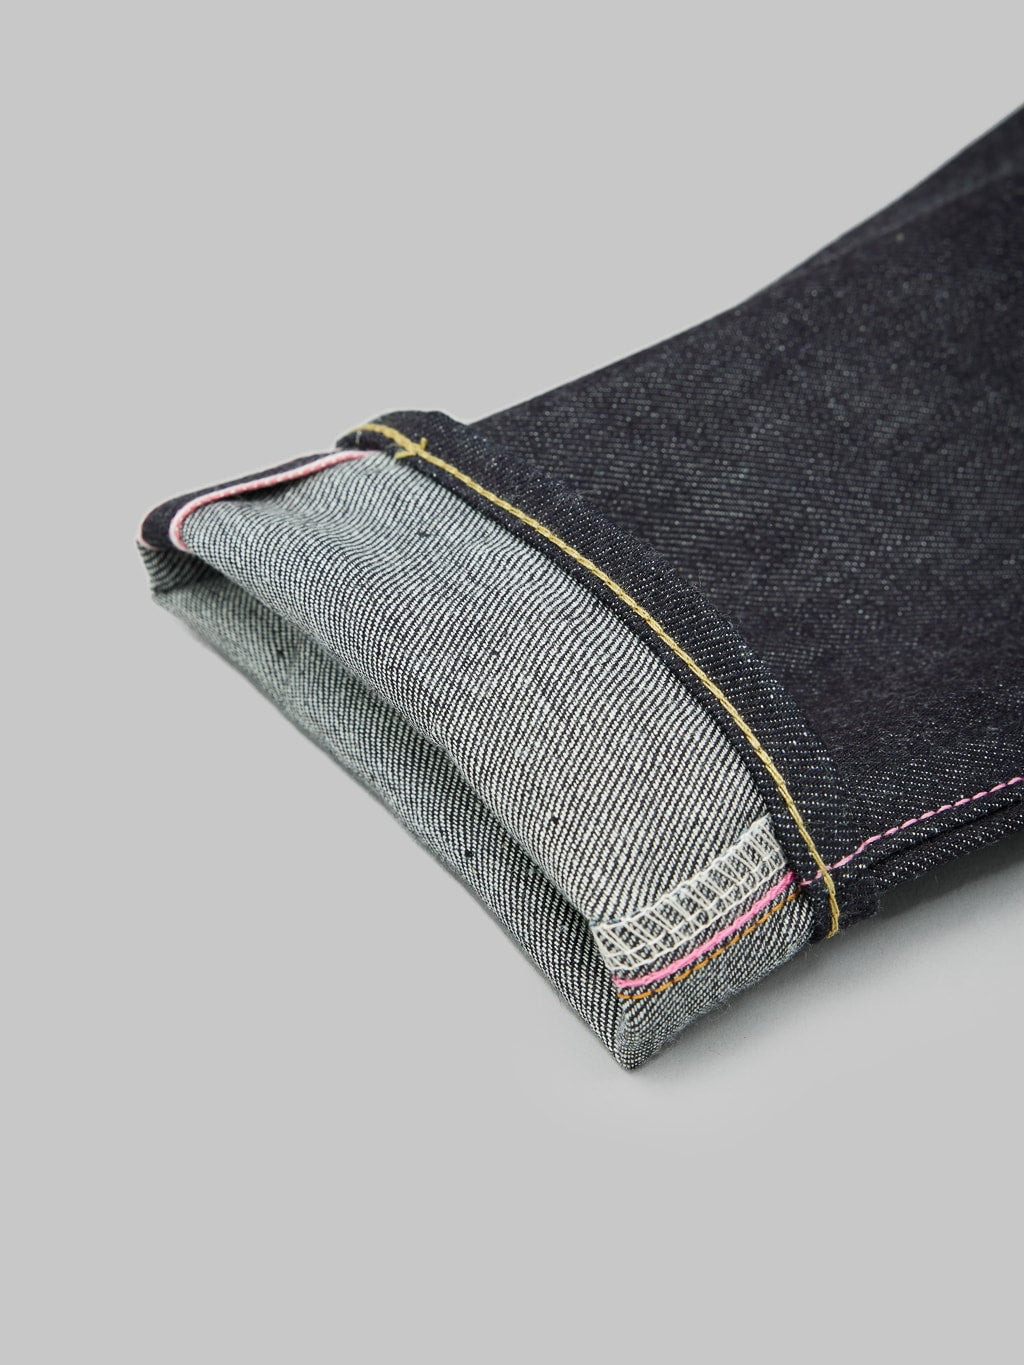 momotaro jeans 0306 12 12oz selvedge denim tight tapered white weft